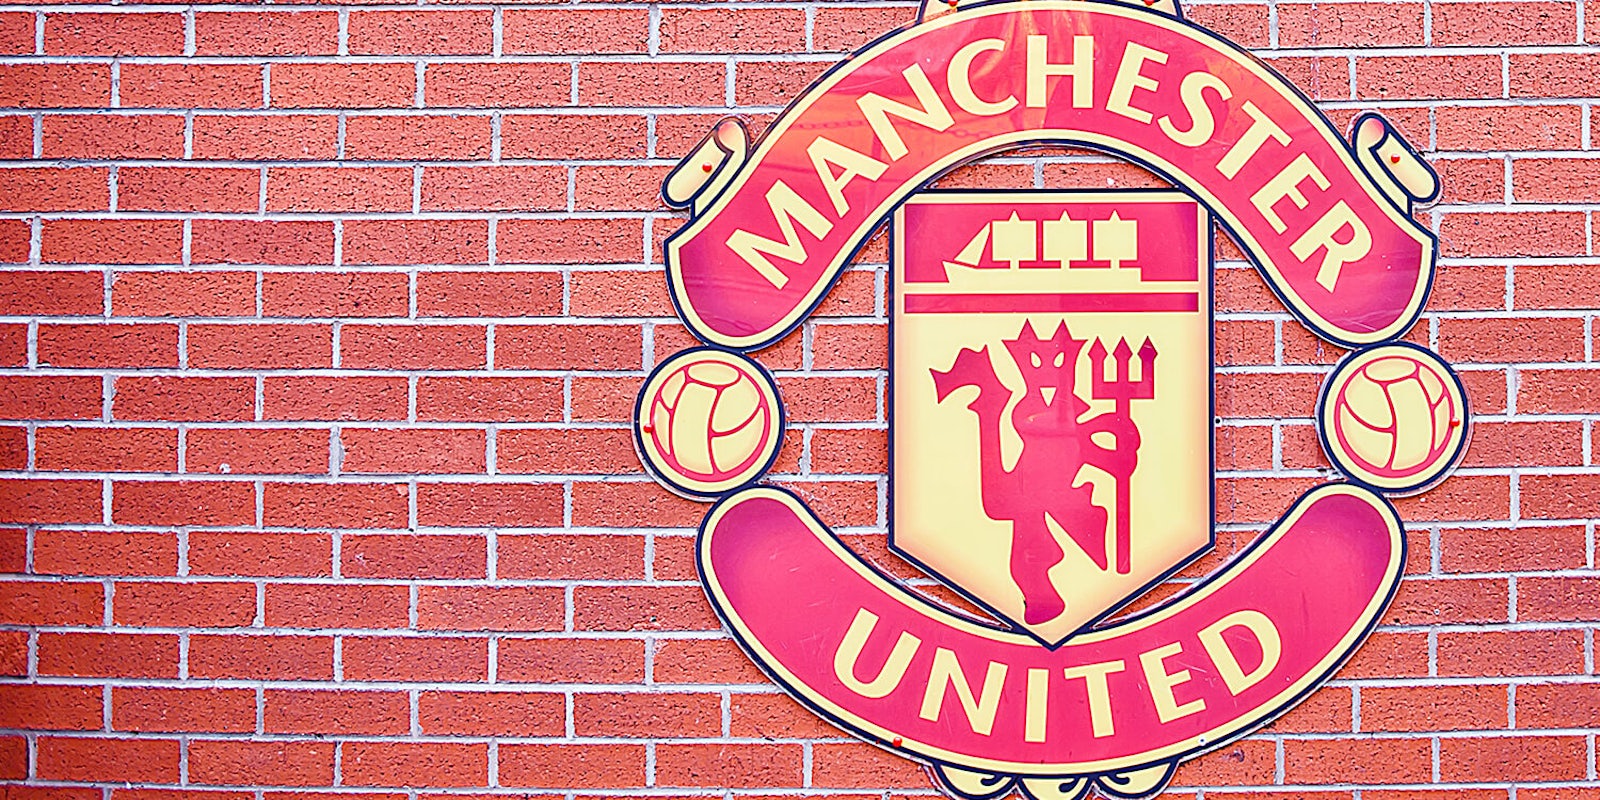 Manchester United logo at Old Trafford